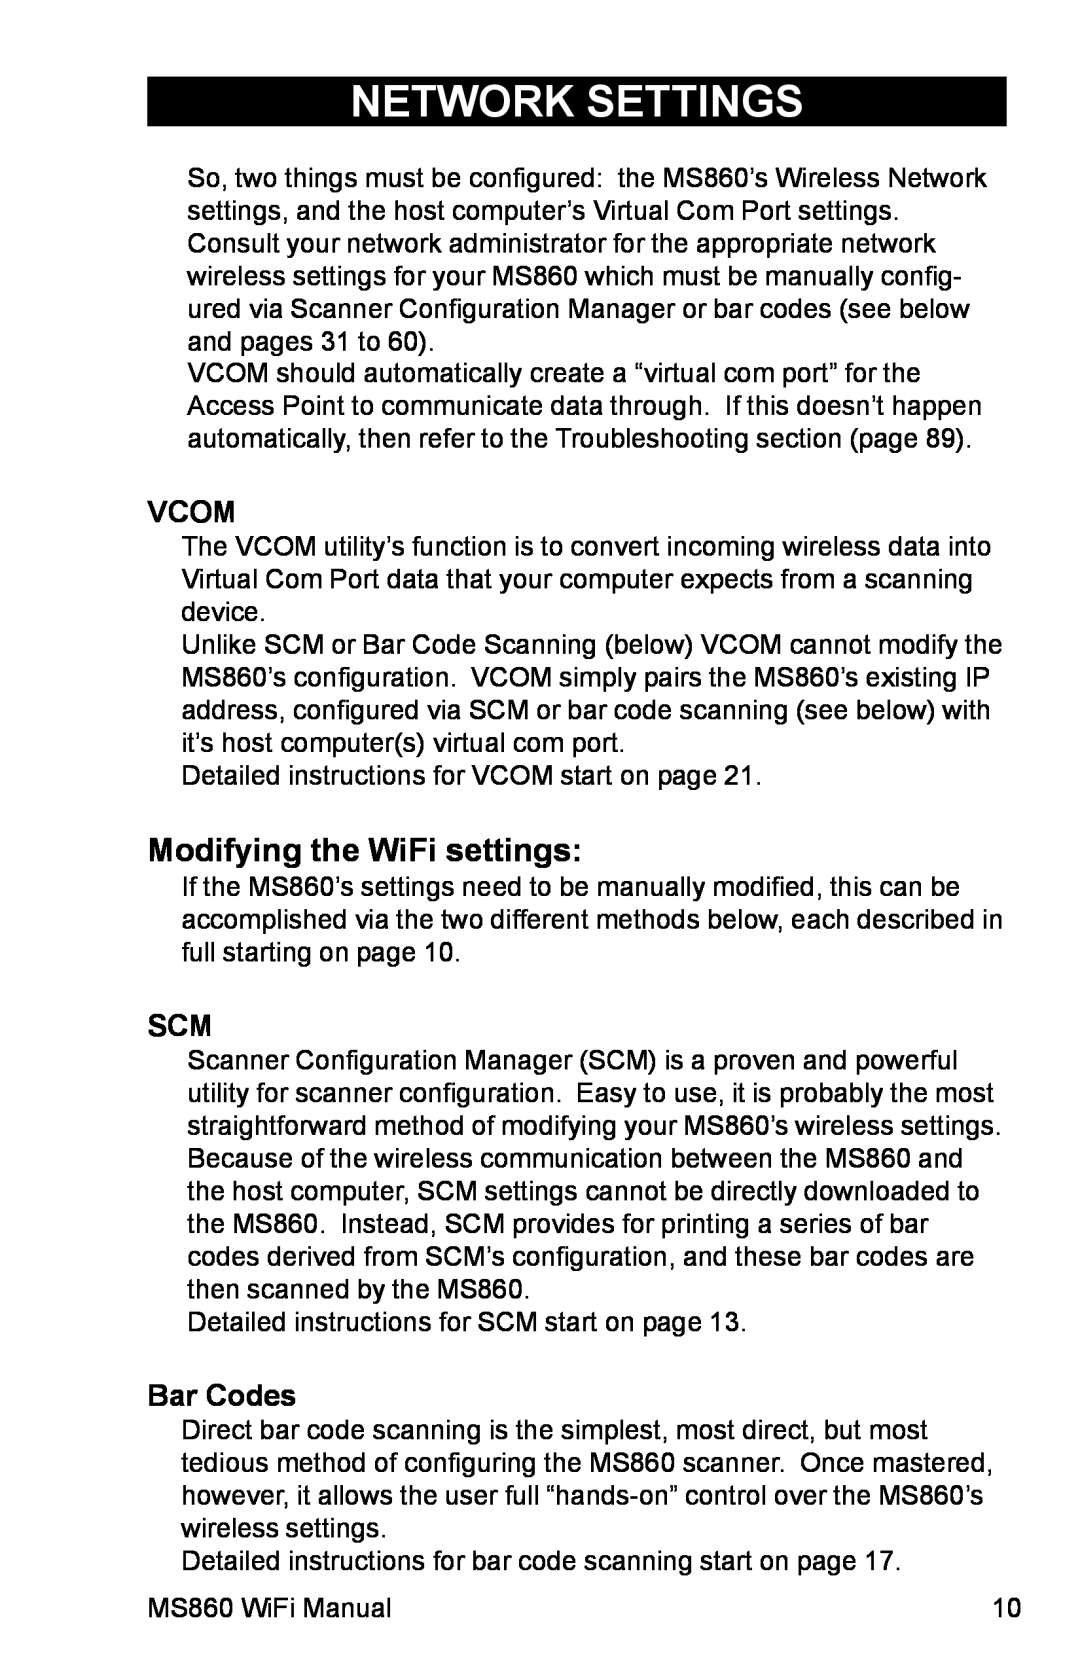 Unitech MS860 manual Modifying the WiFi settings, Vcom, Bar Codes, Network Settings 